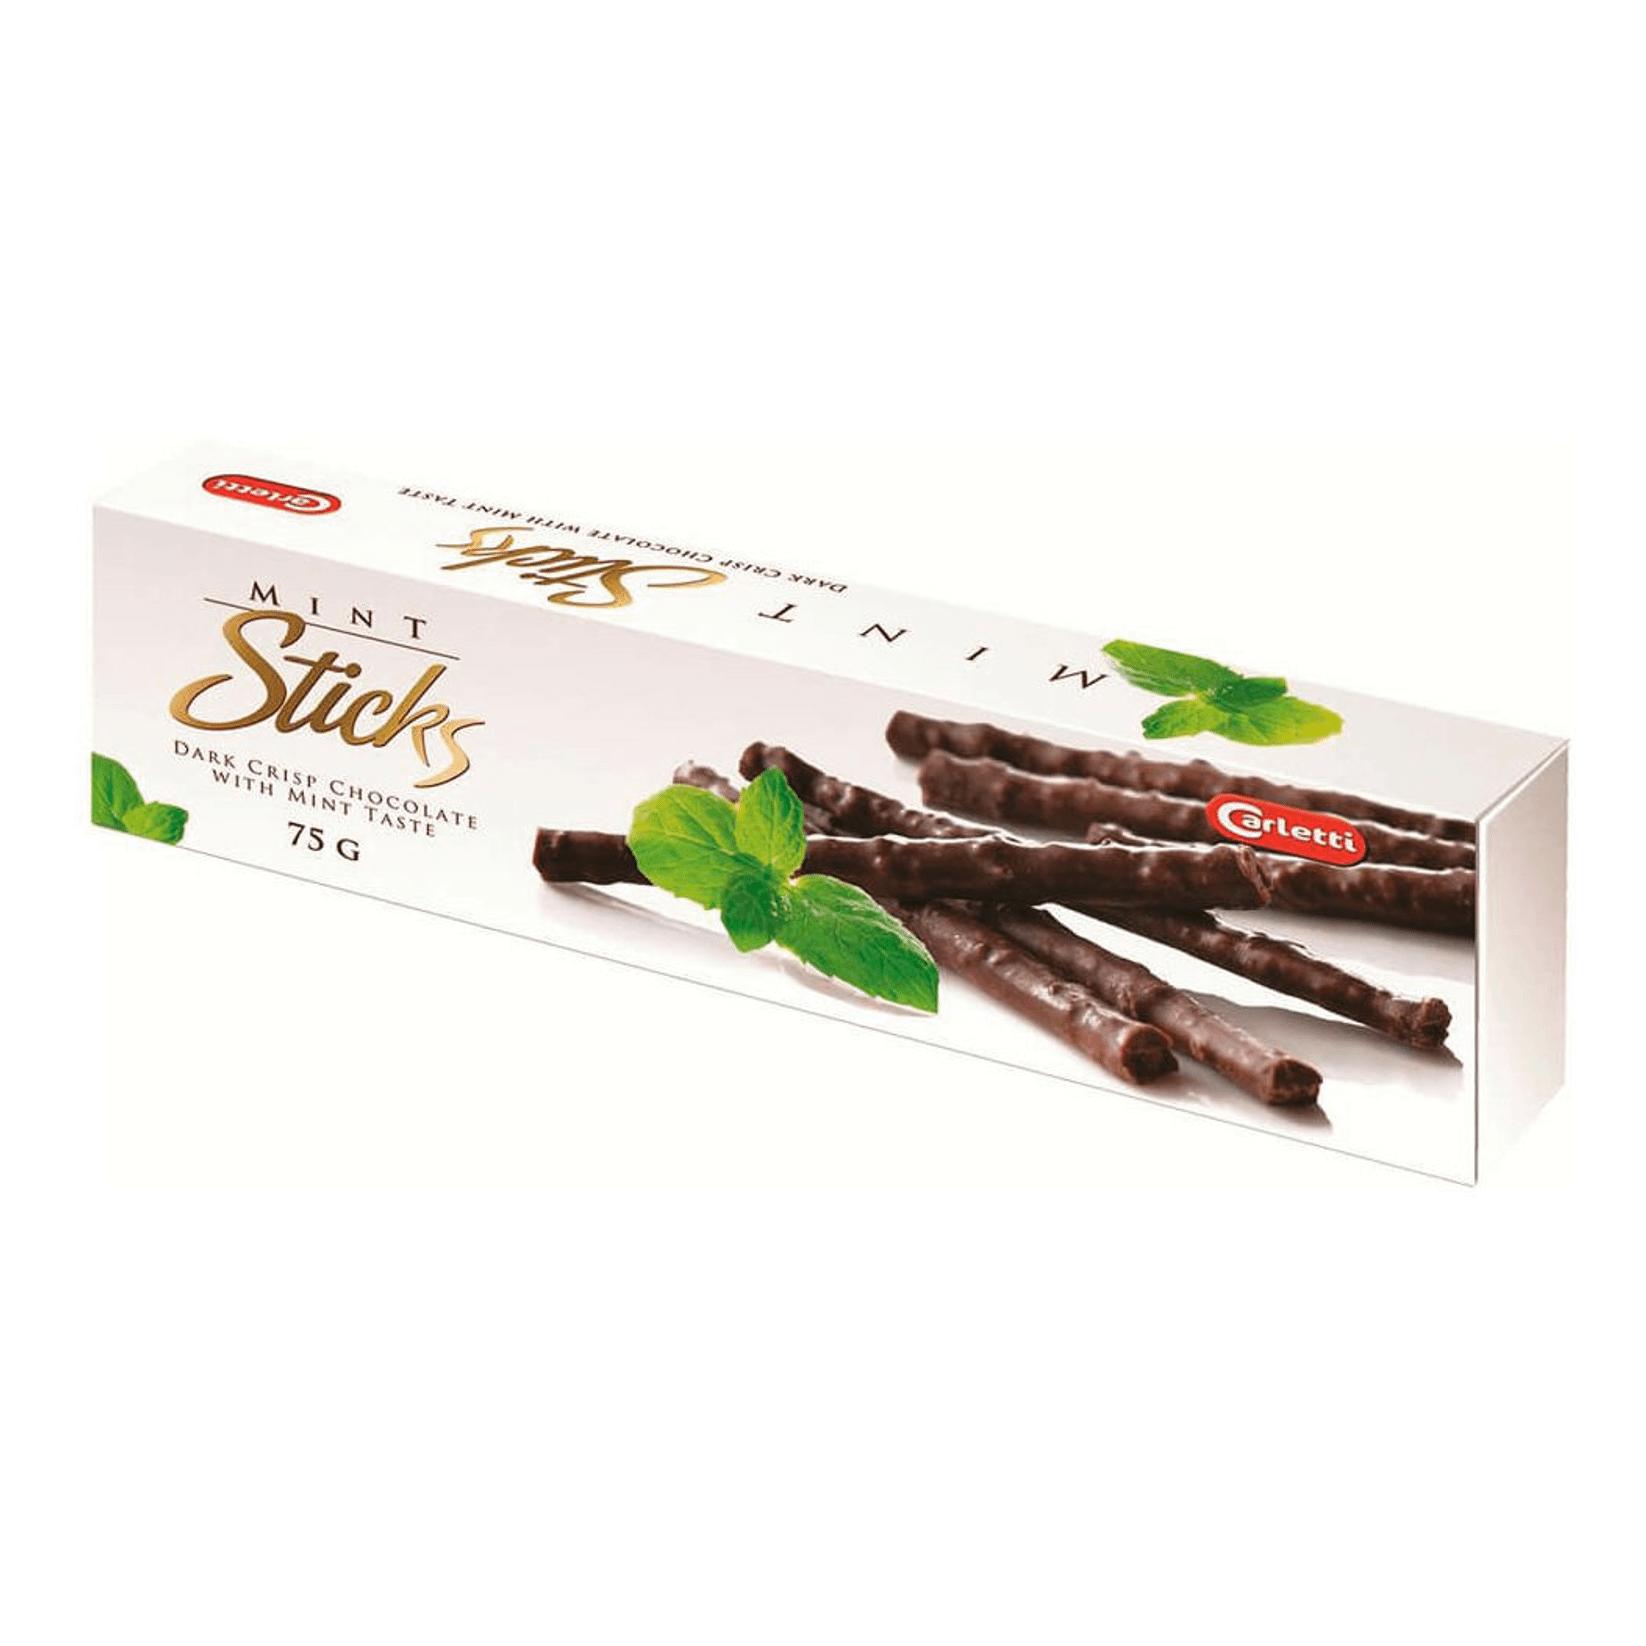 Хрустящие палочки Carletti Mint sticks шоколадные с мятой 75 гр., картон